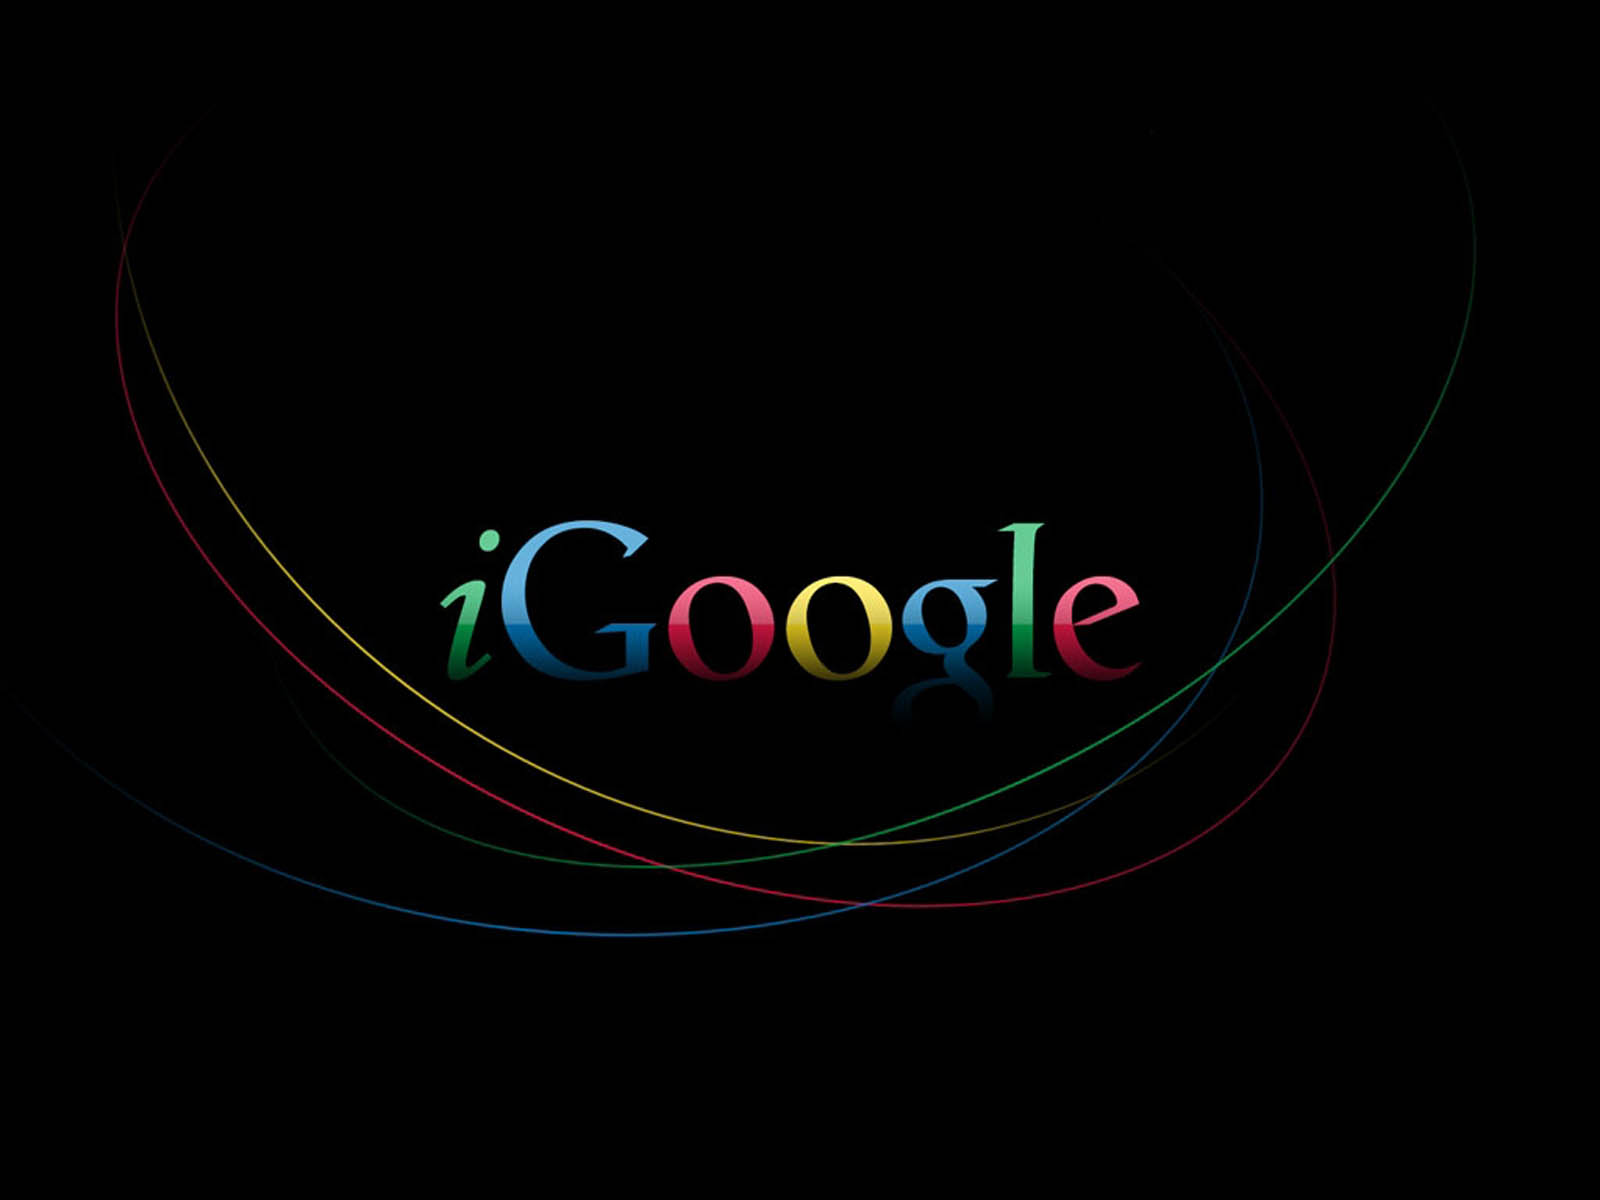 Google Background And Wallpaper Jpg